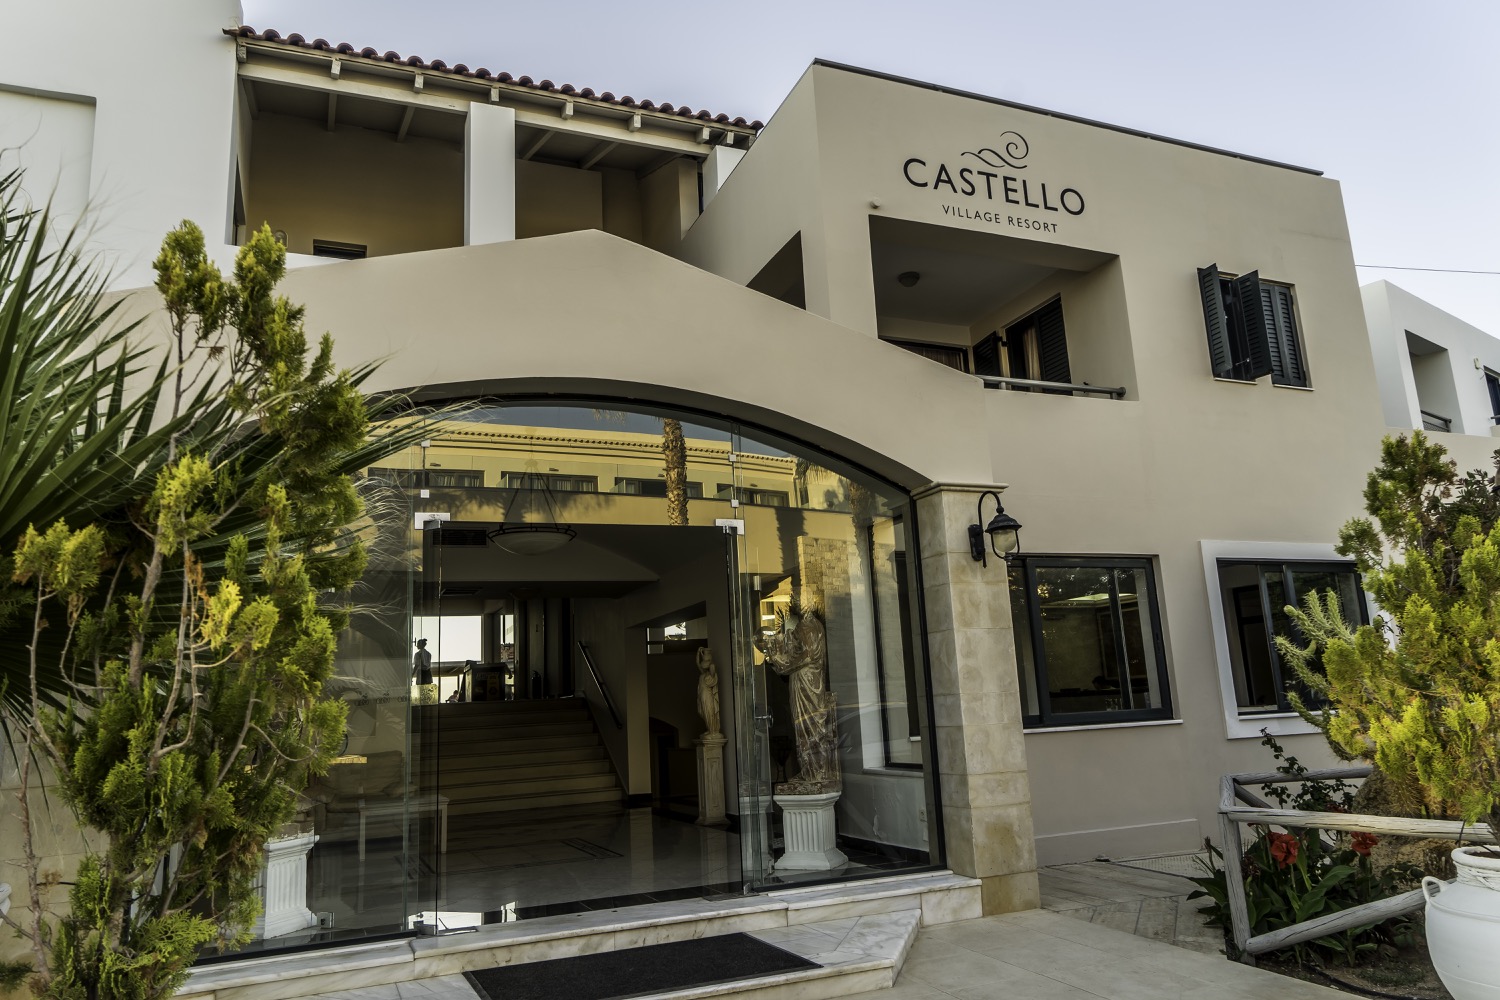 4* Castello Village Resort - Λασίθι, Κρήτη ✦ 2 Ημέρες